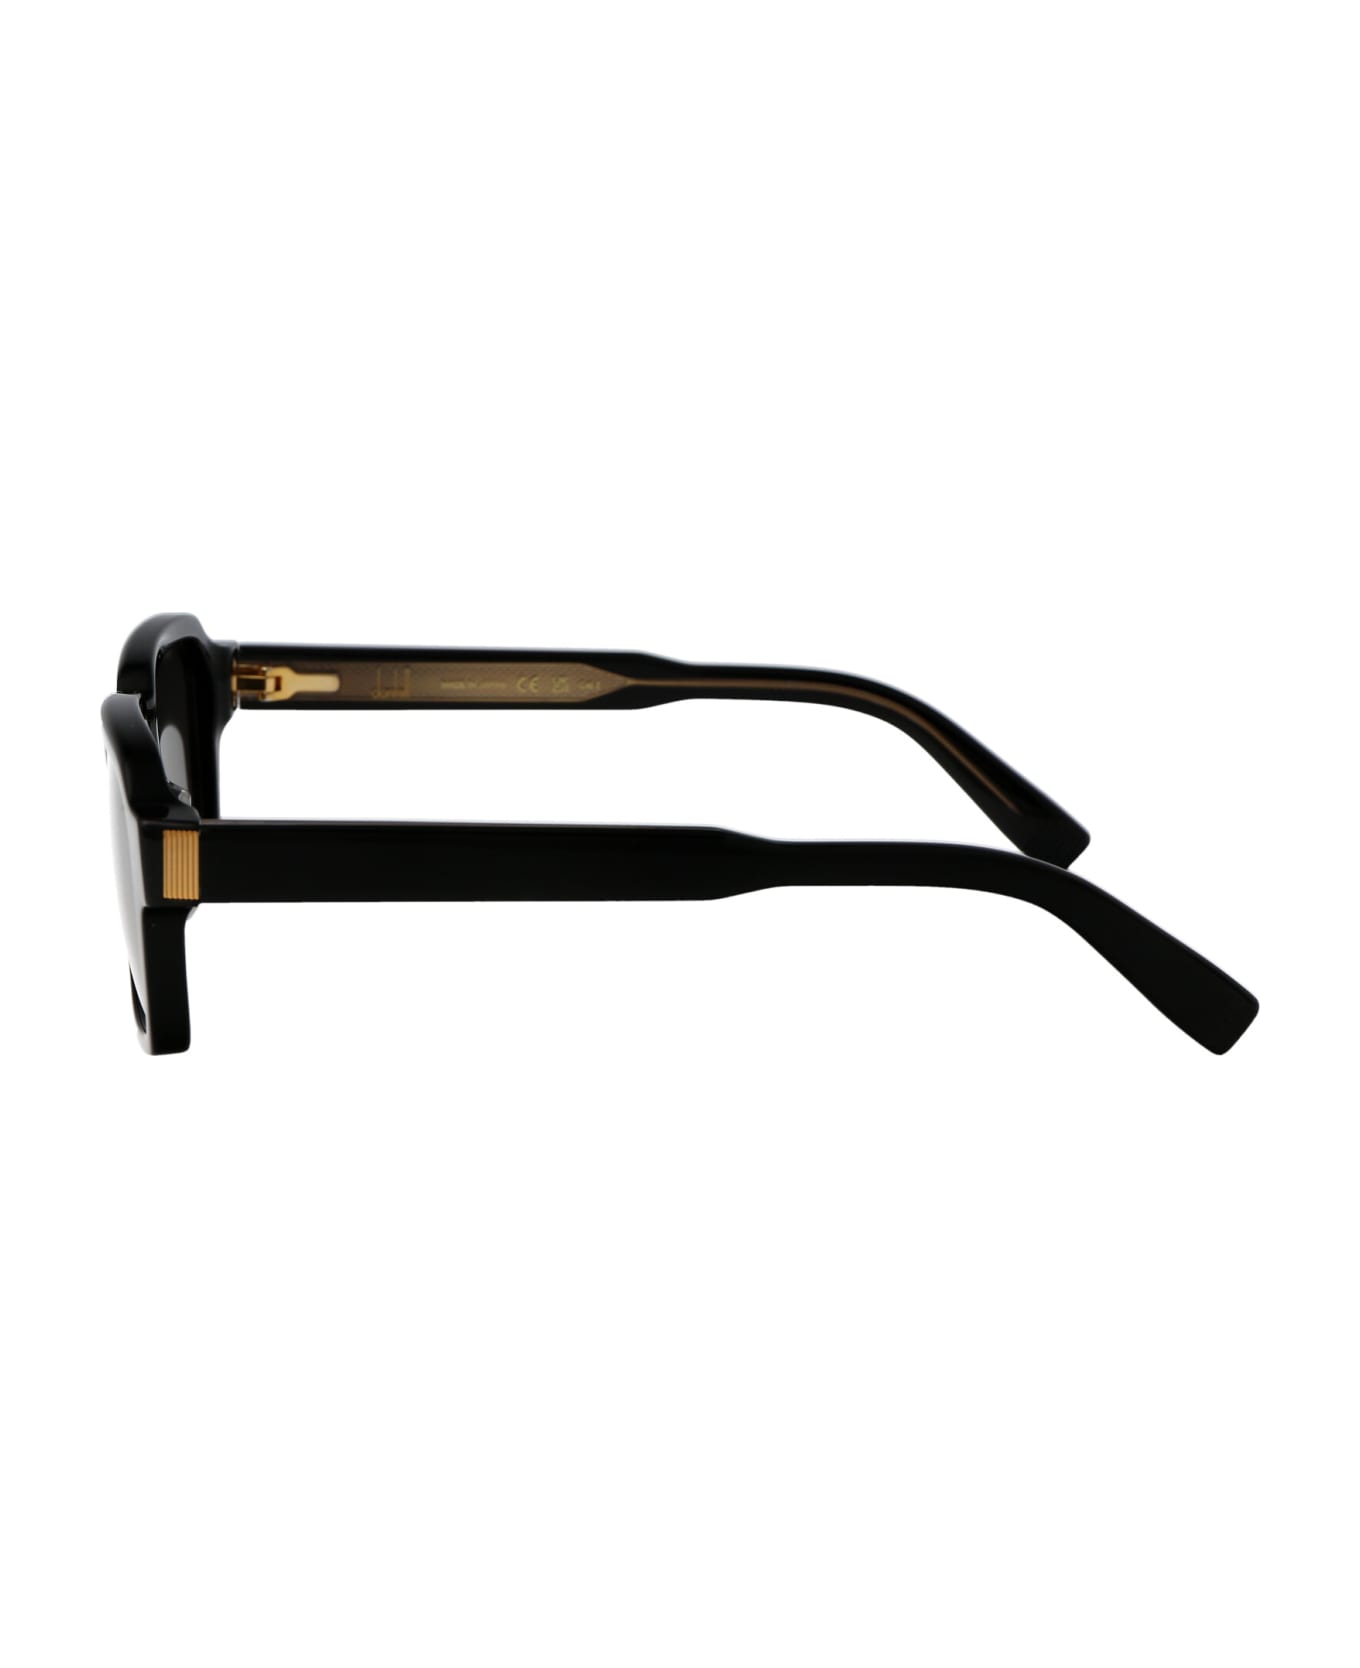 Dunhill Du0057s Sunglasses - 001 BLACK BLACK GREY